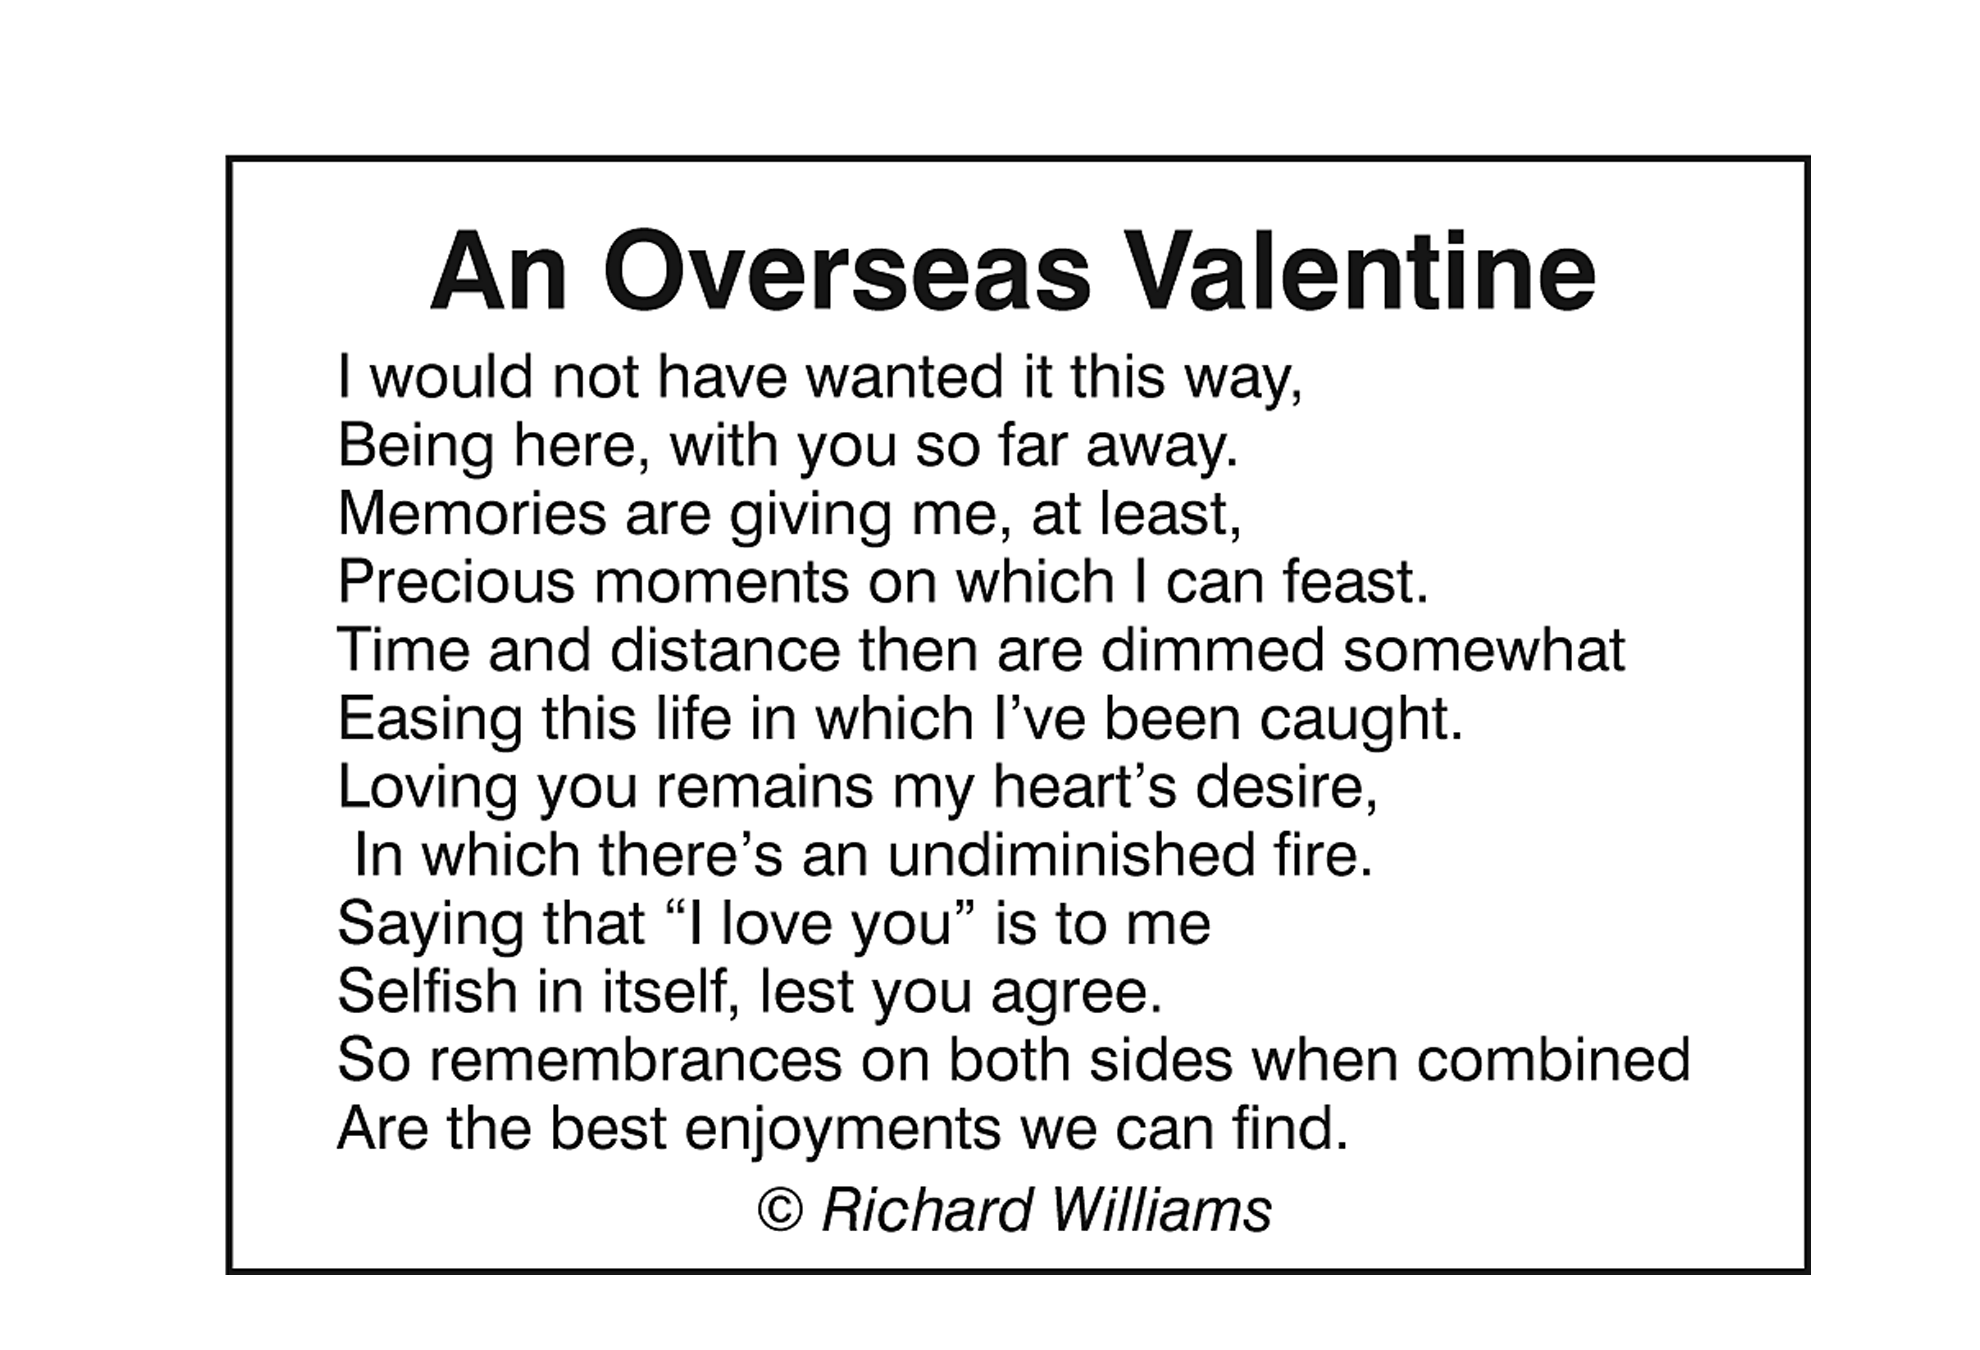 Richard Williams Poem: An Overseas Valentine